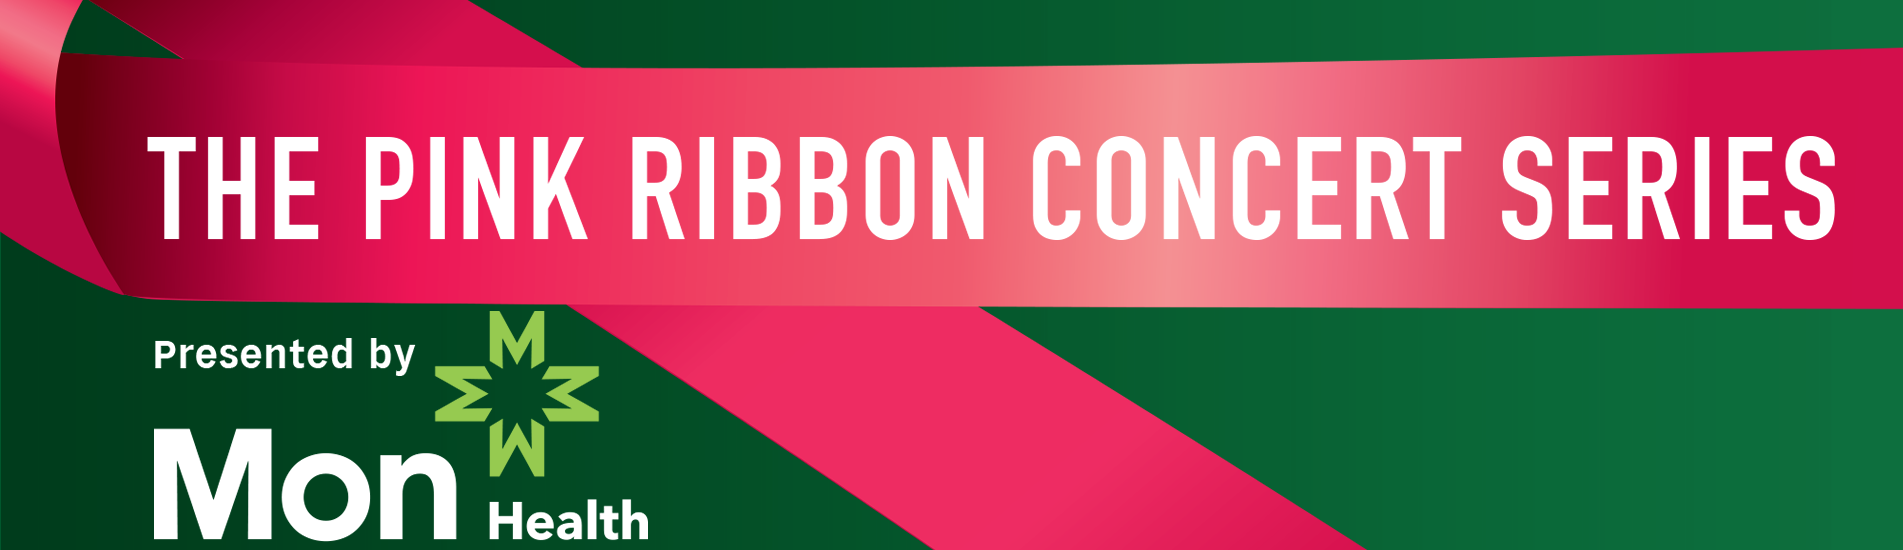 pink robbon concert series